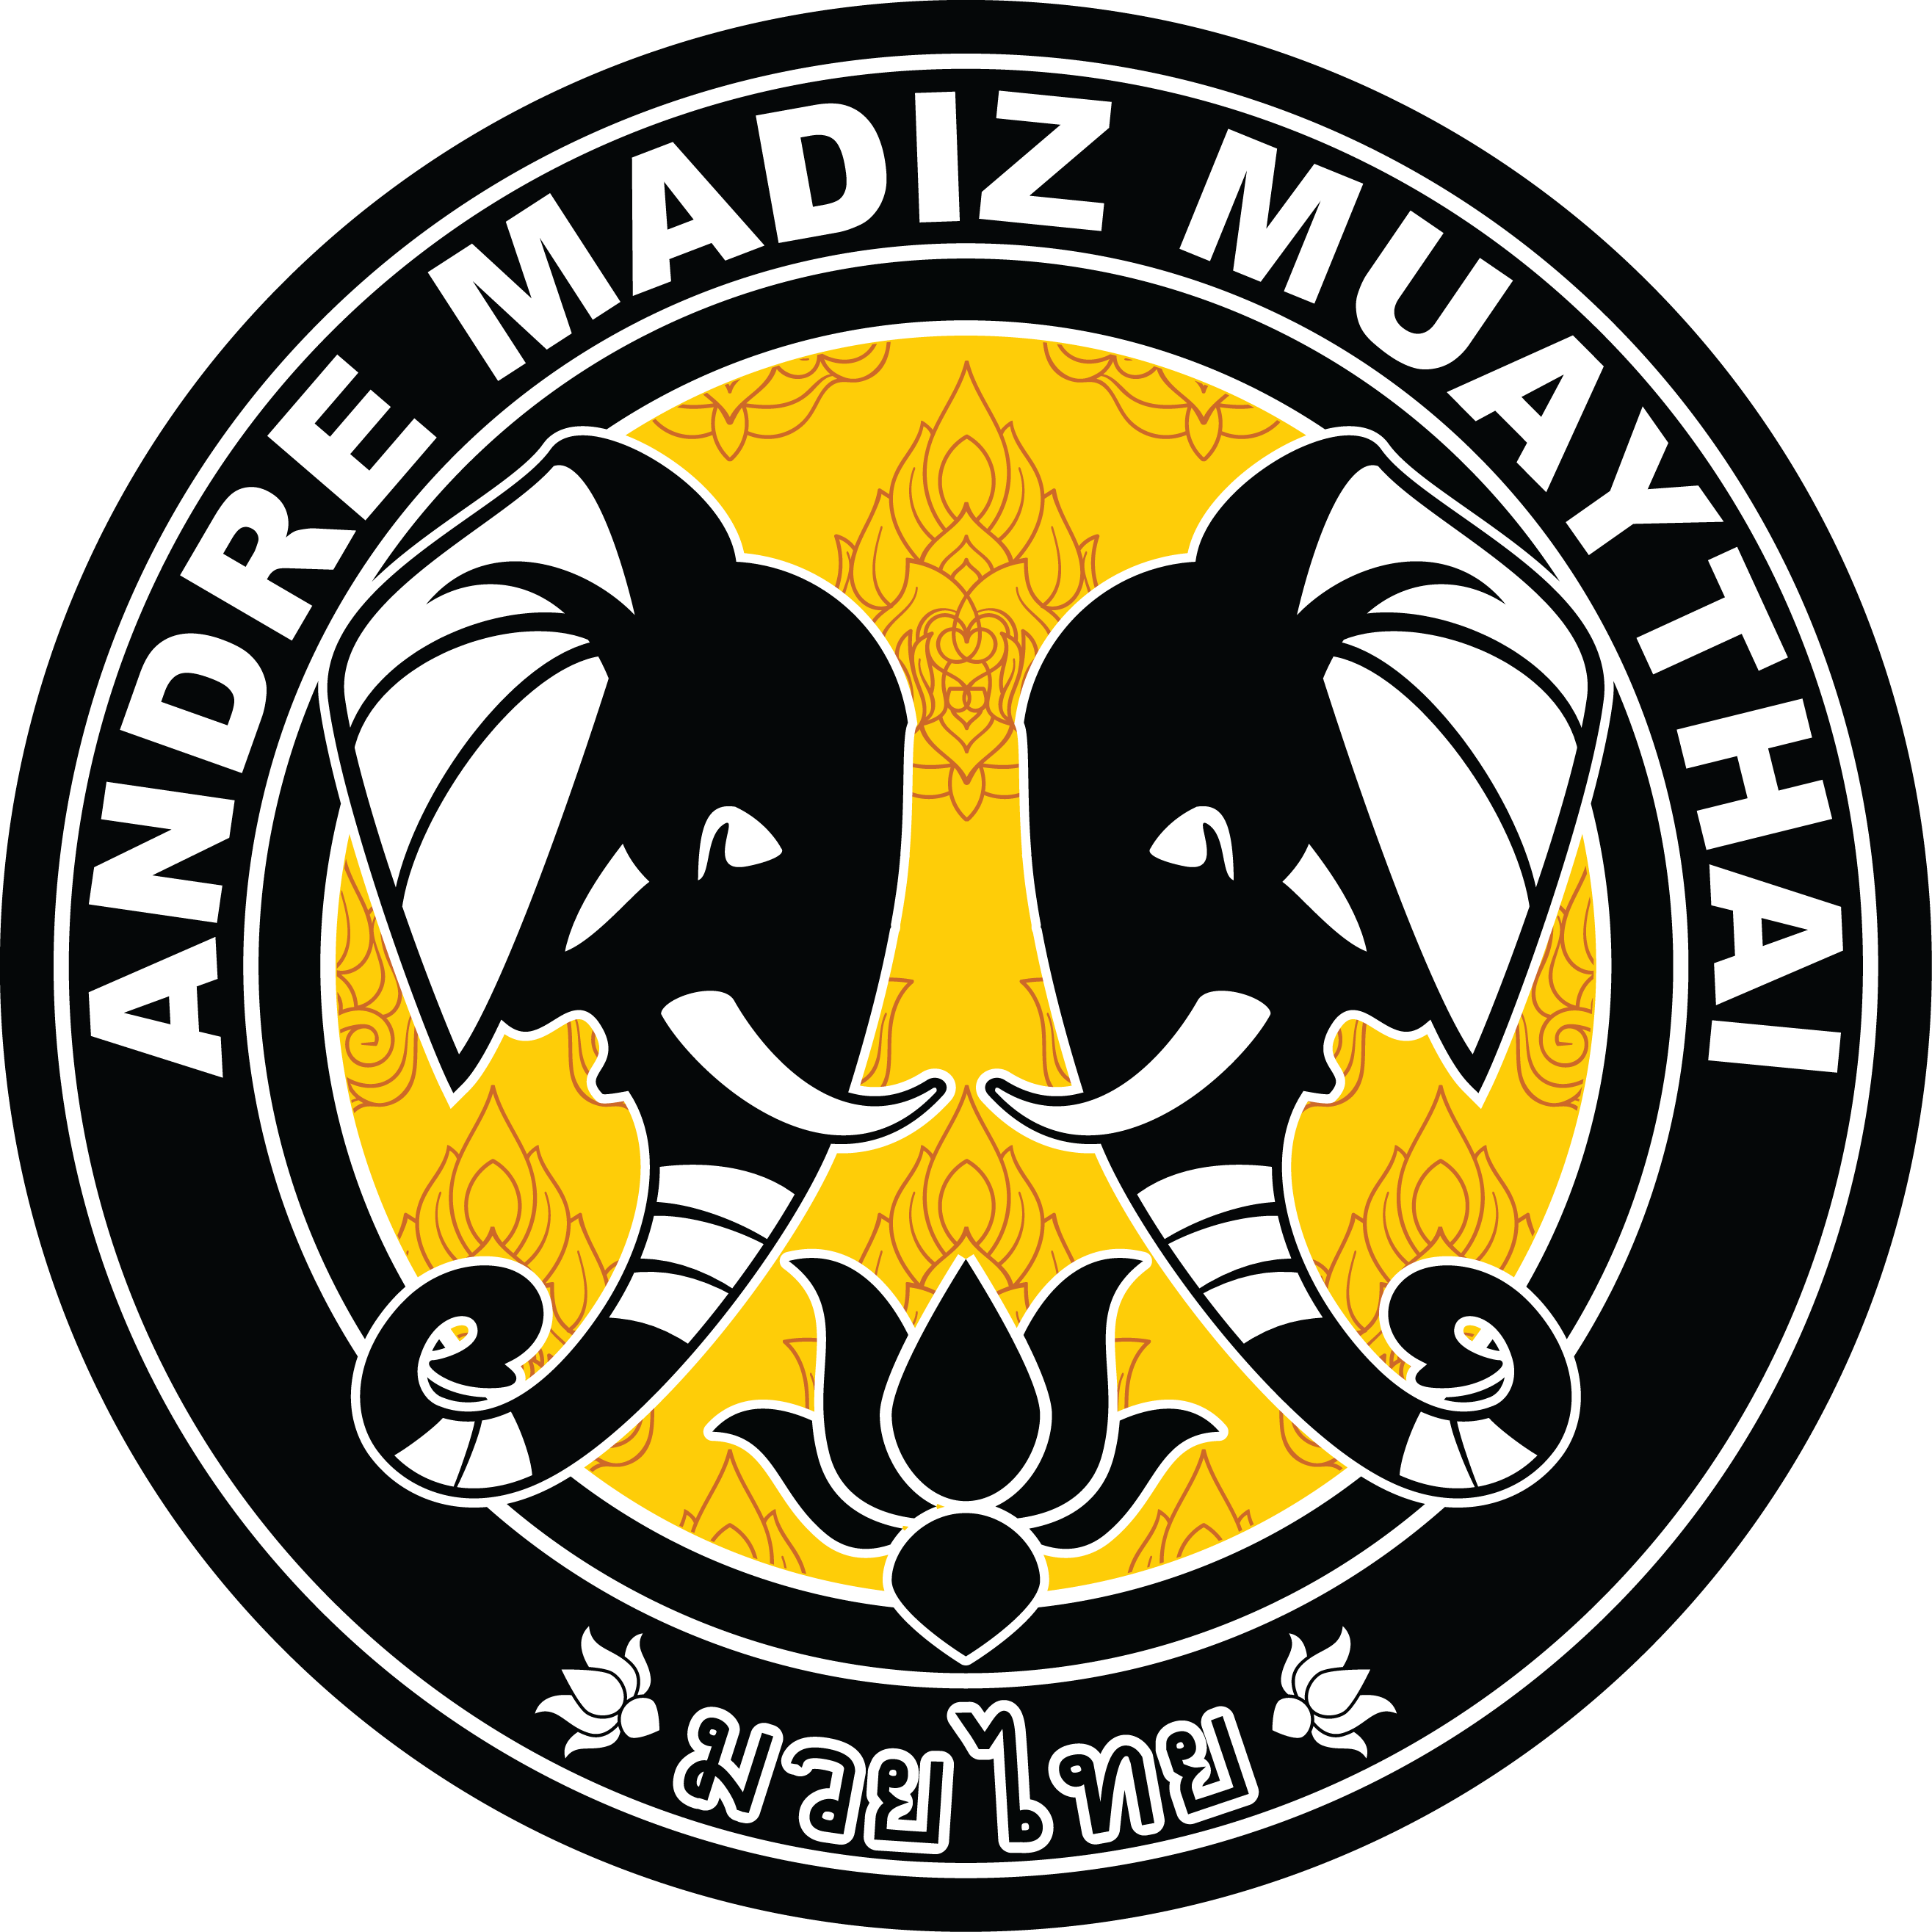 Andre Madiz Logo Featuring Two Elphant Heads Illustration